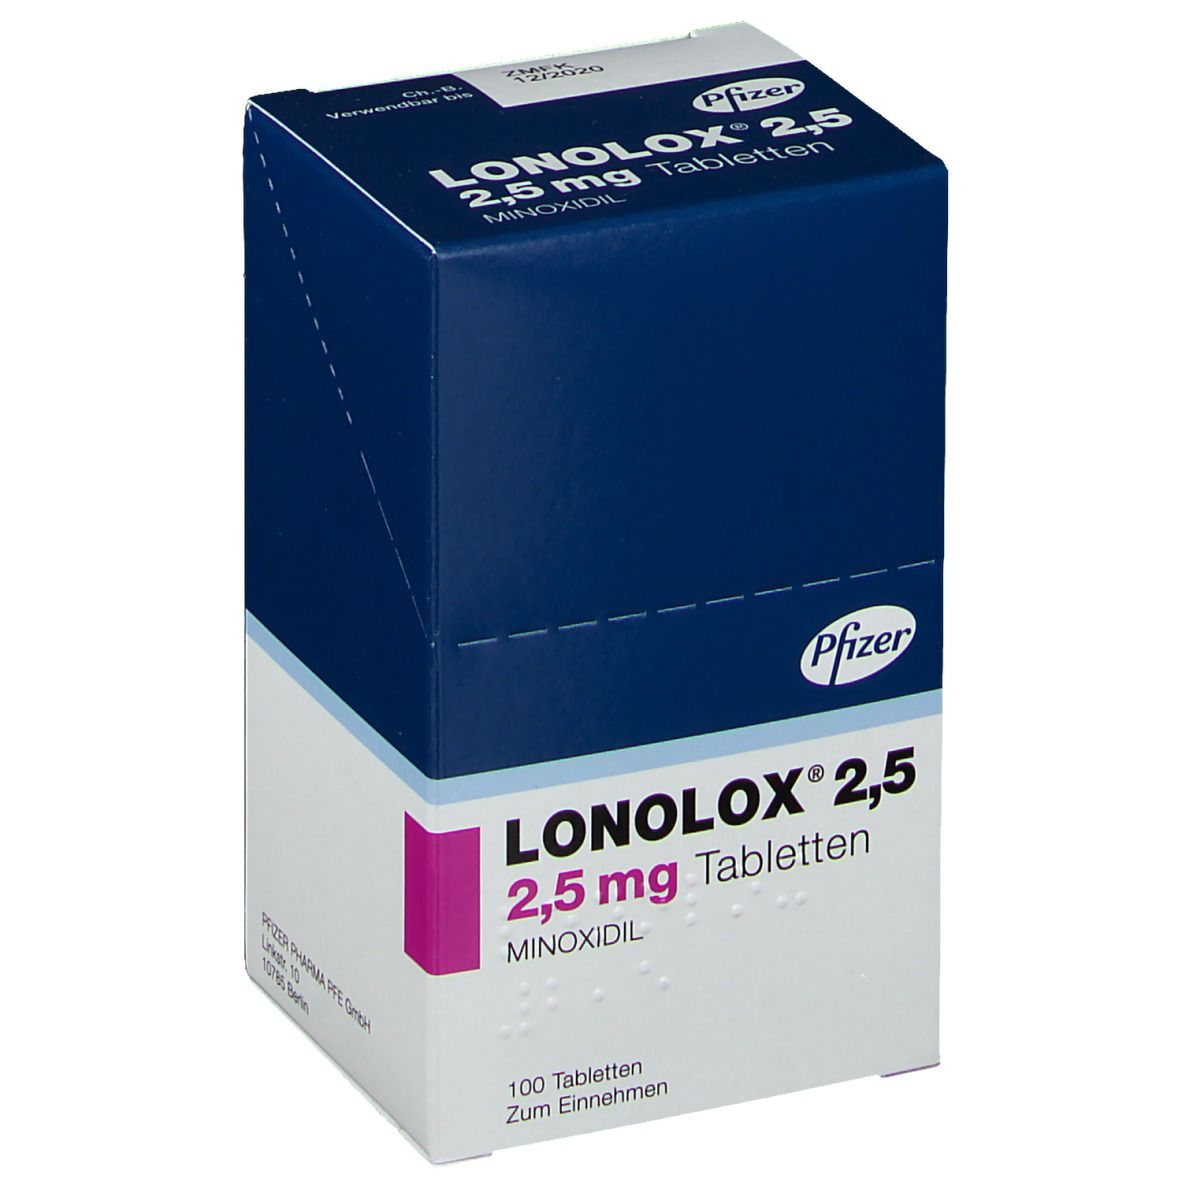 LONOLOX® 2,5 mg